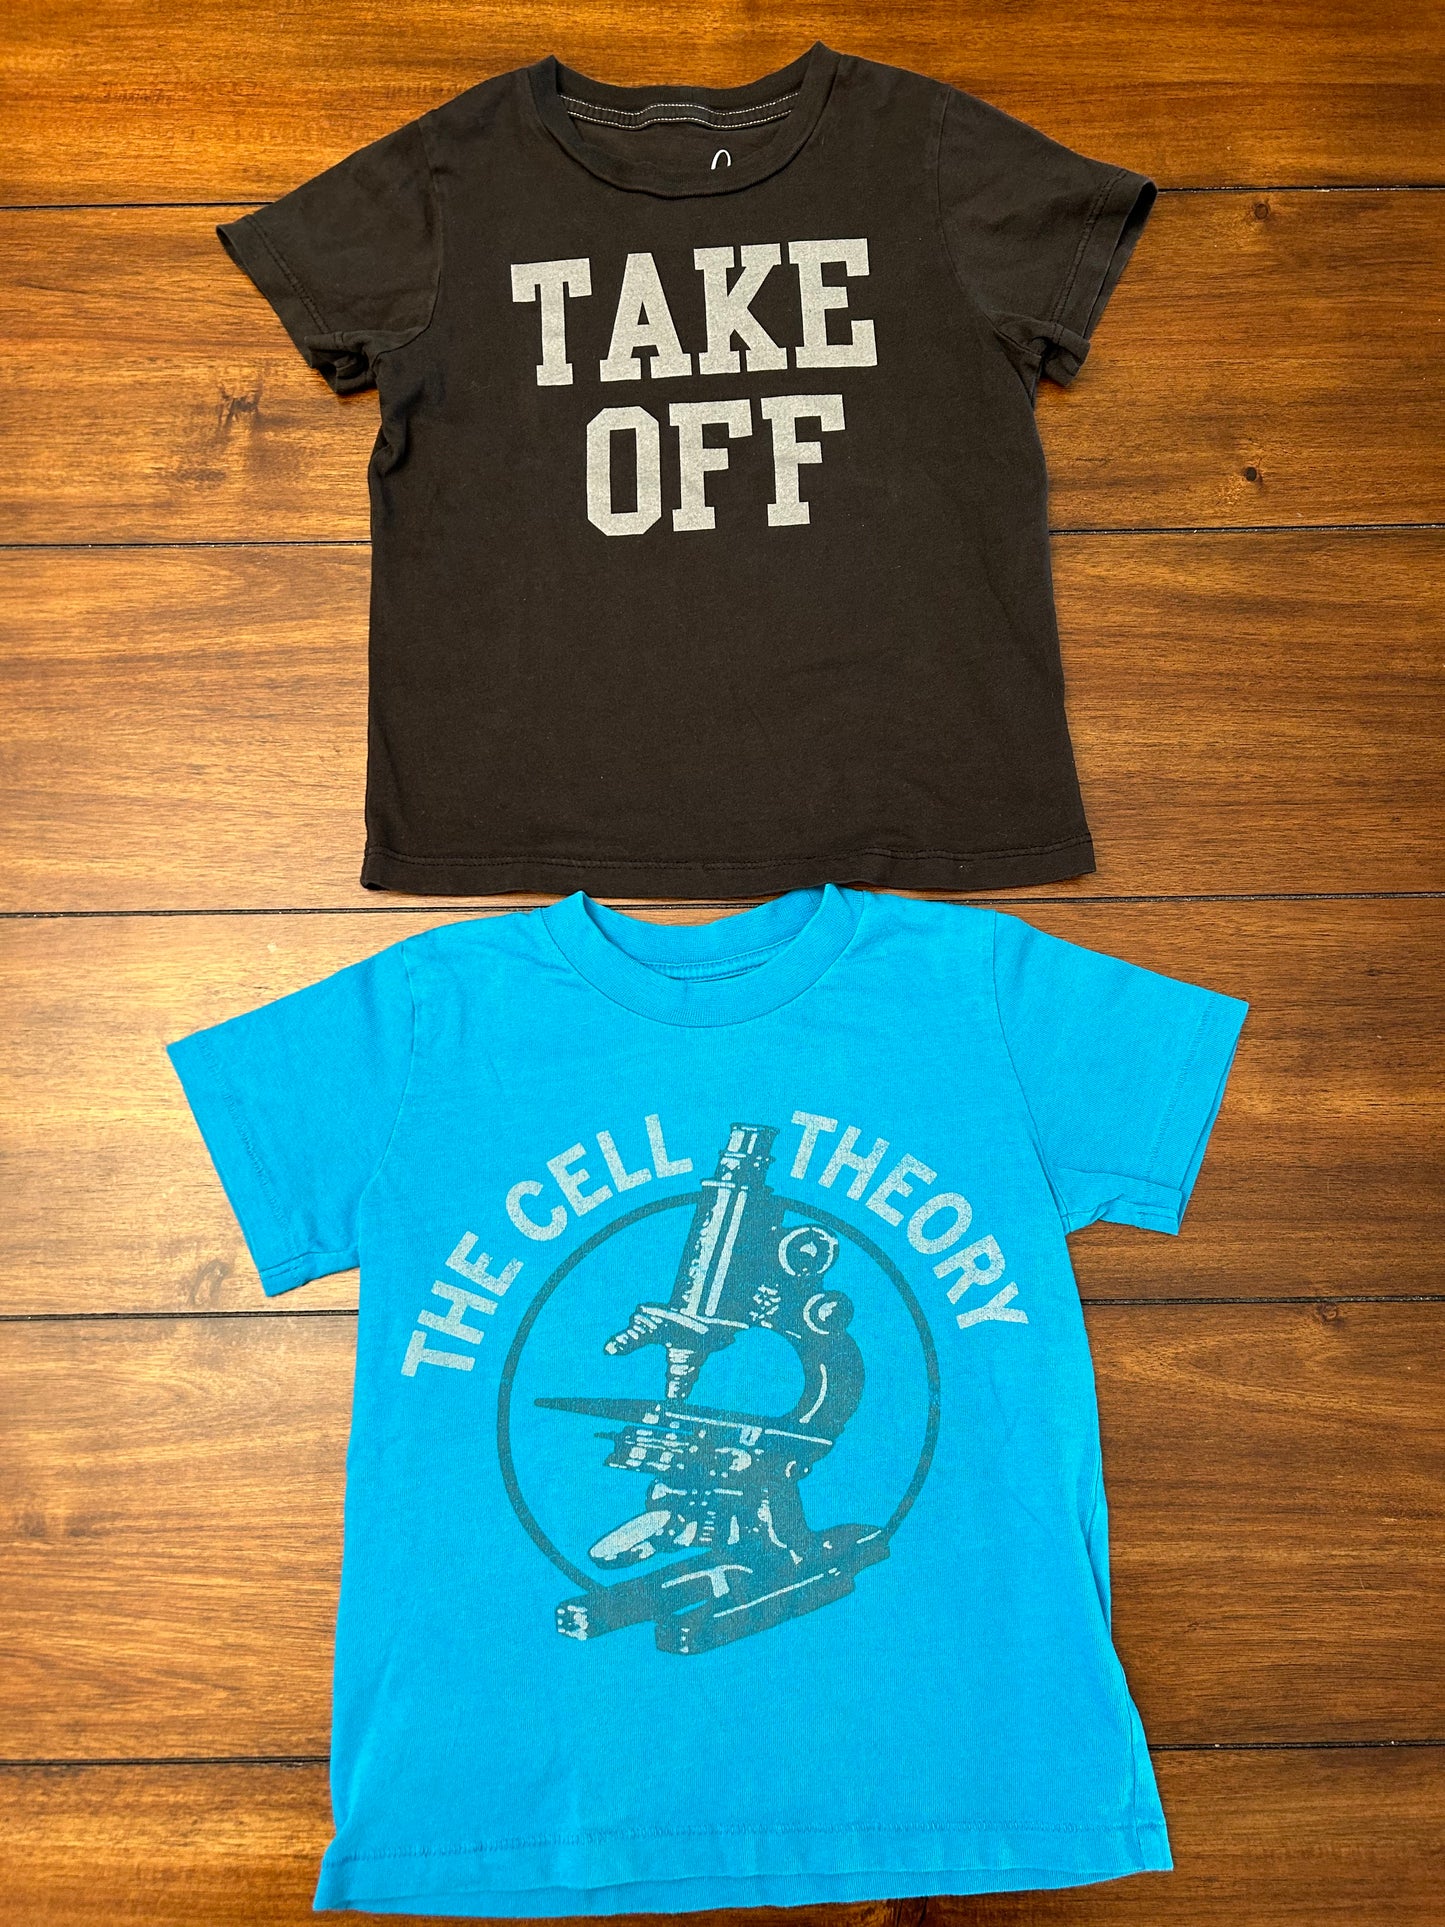 Peek Boys Dark Teal & Black Graphic T-shirt Bundle Size 2/3 PPU 45040